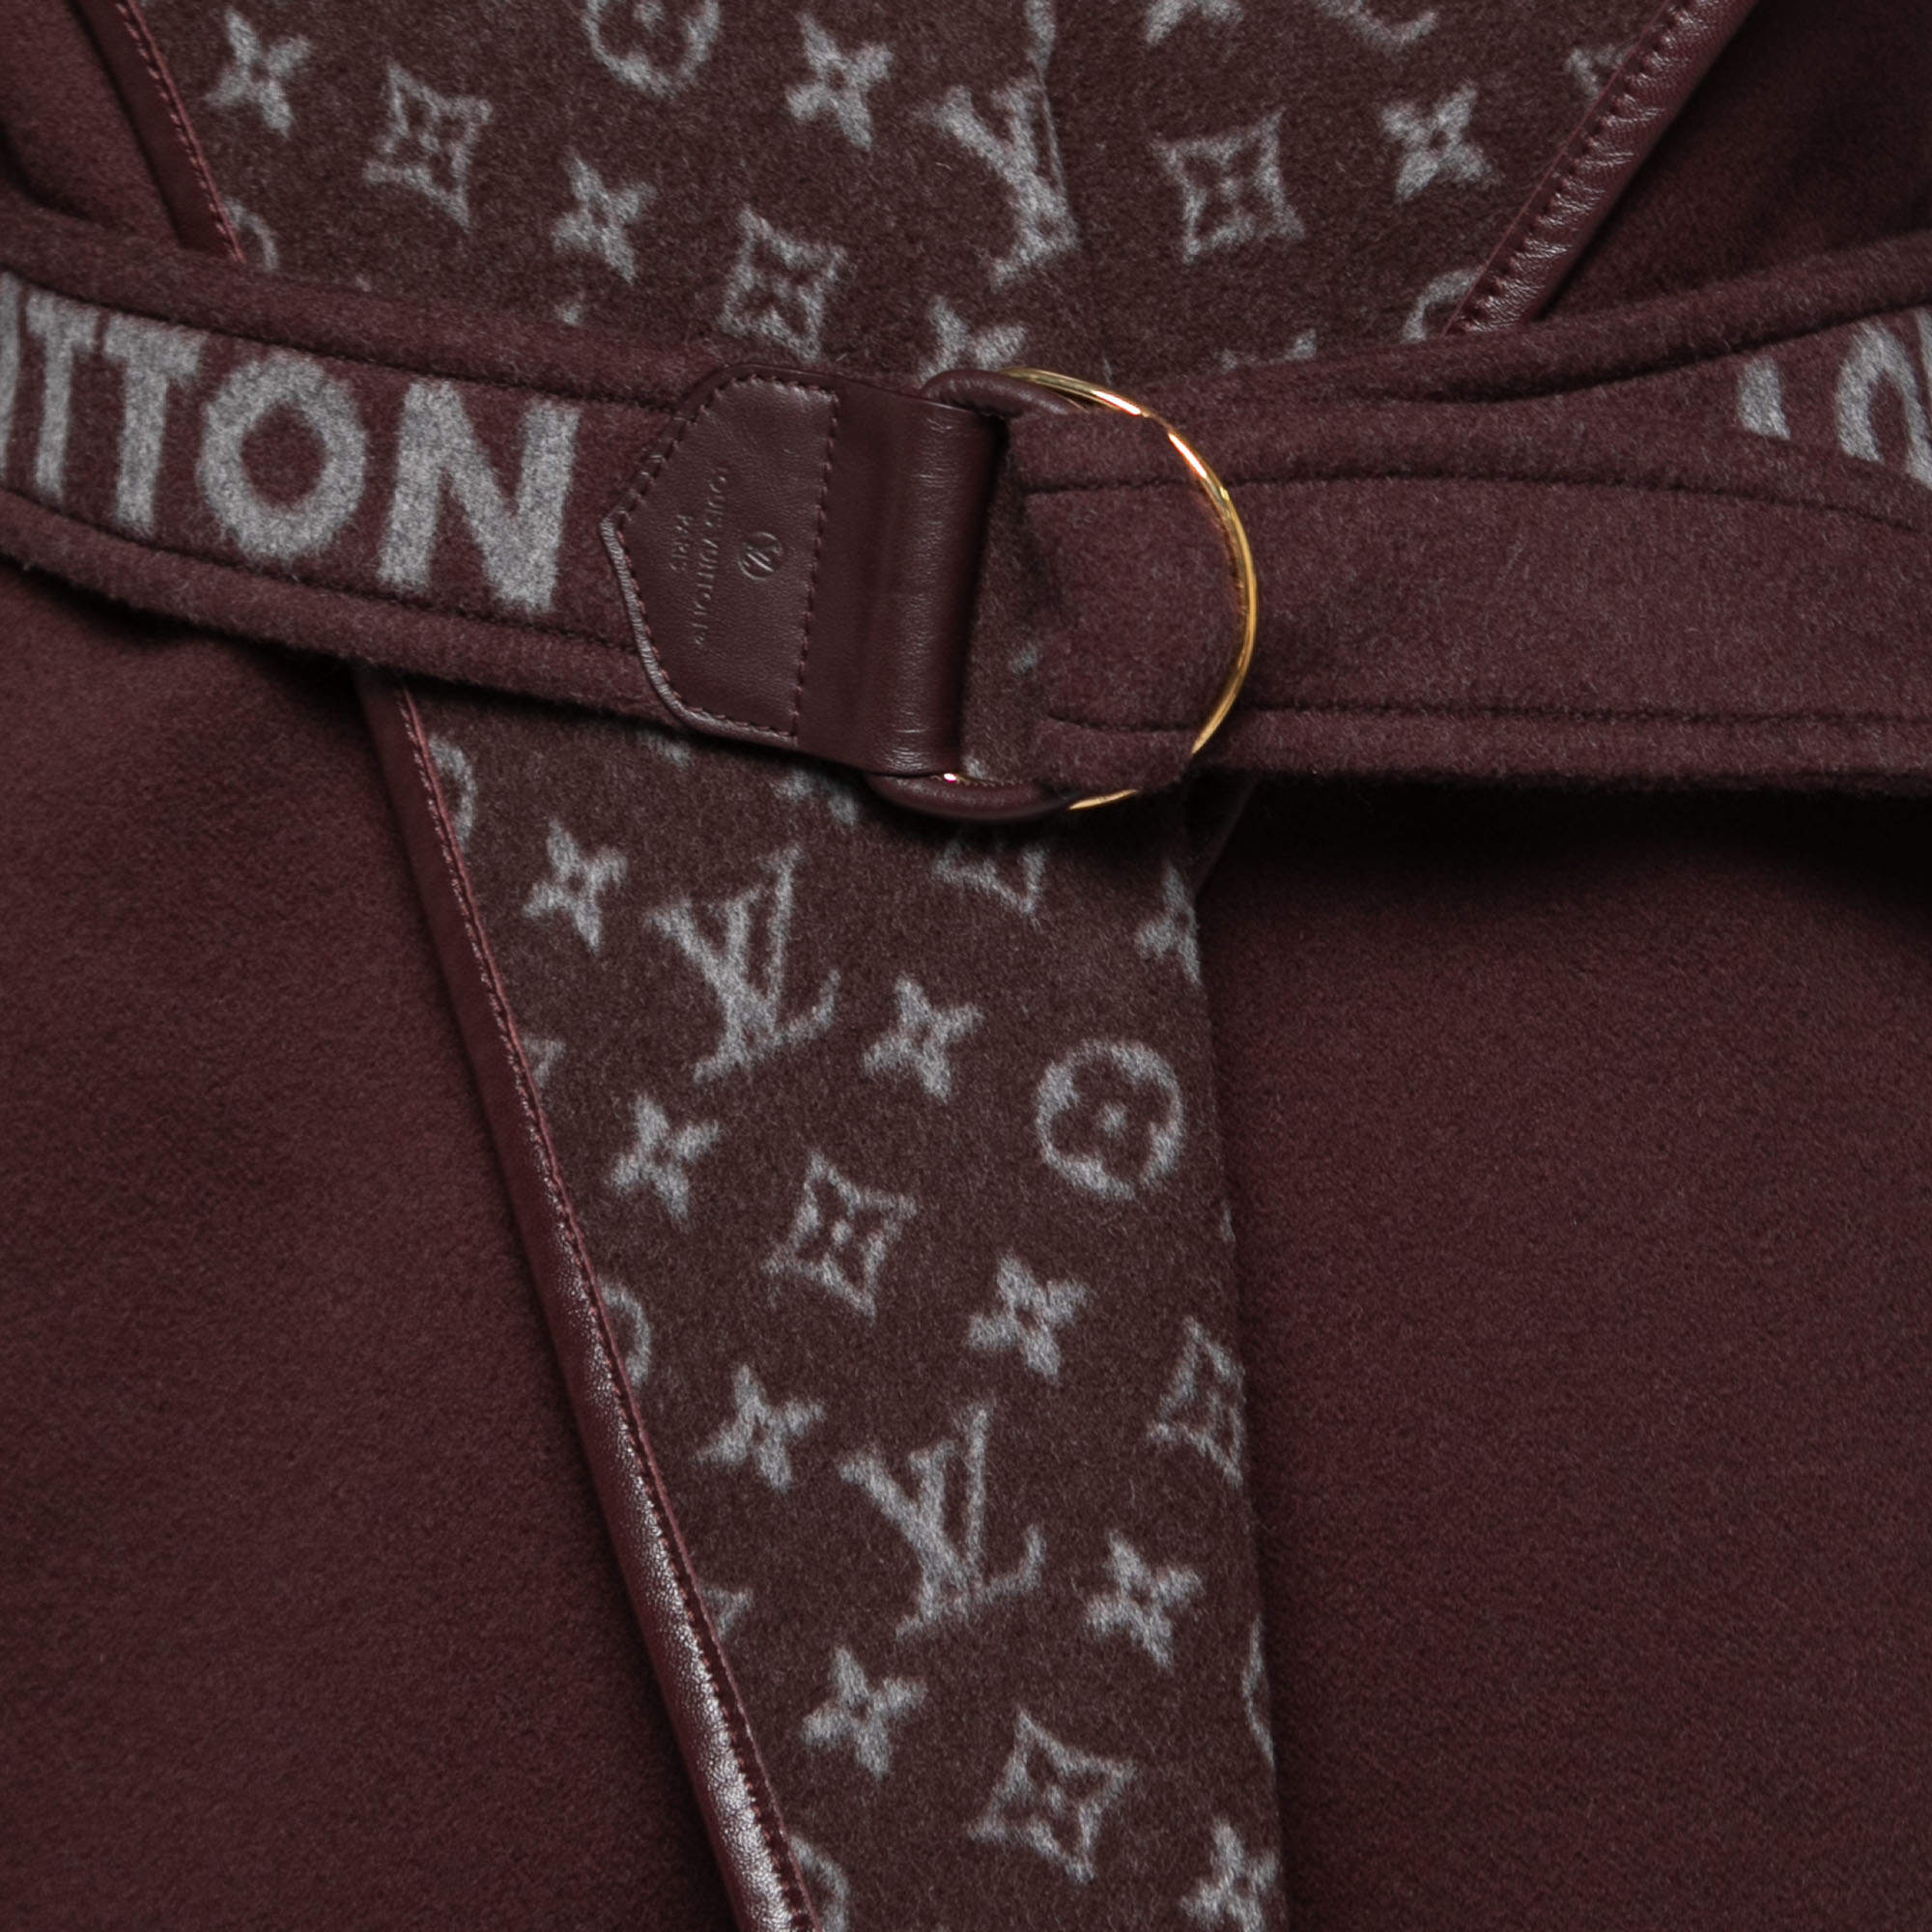 Louis Vuitton Hooded Coat LV Monogram – peehe